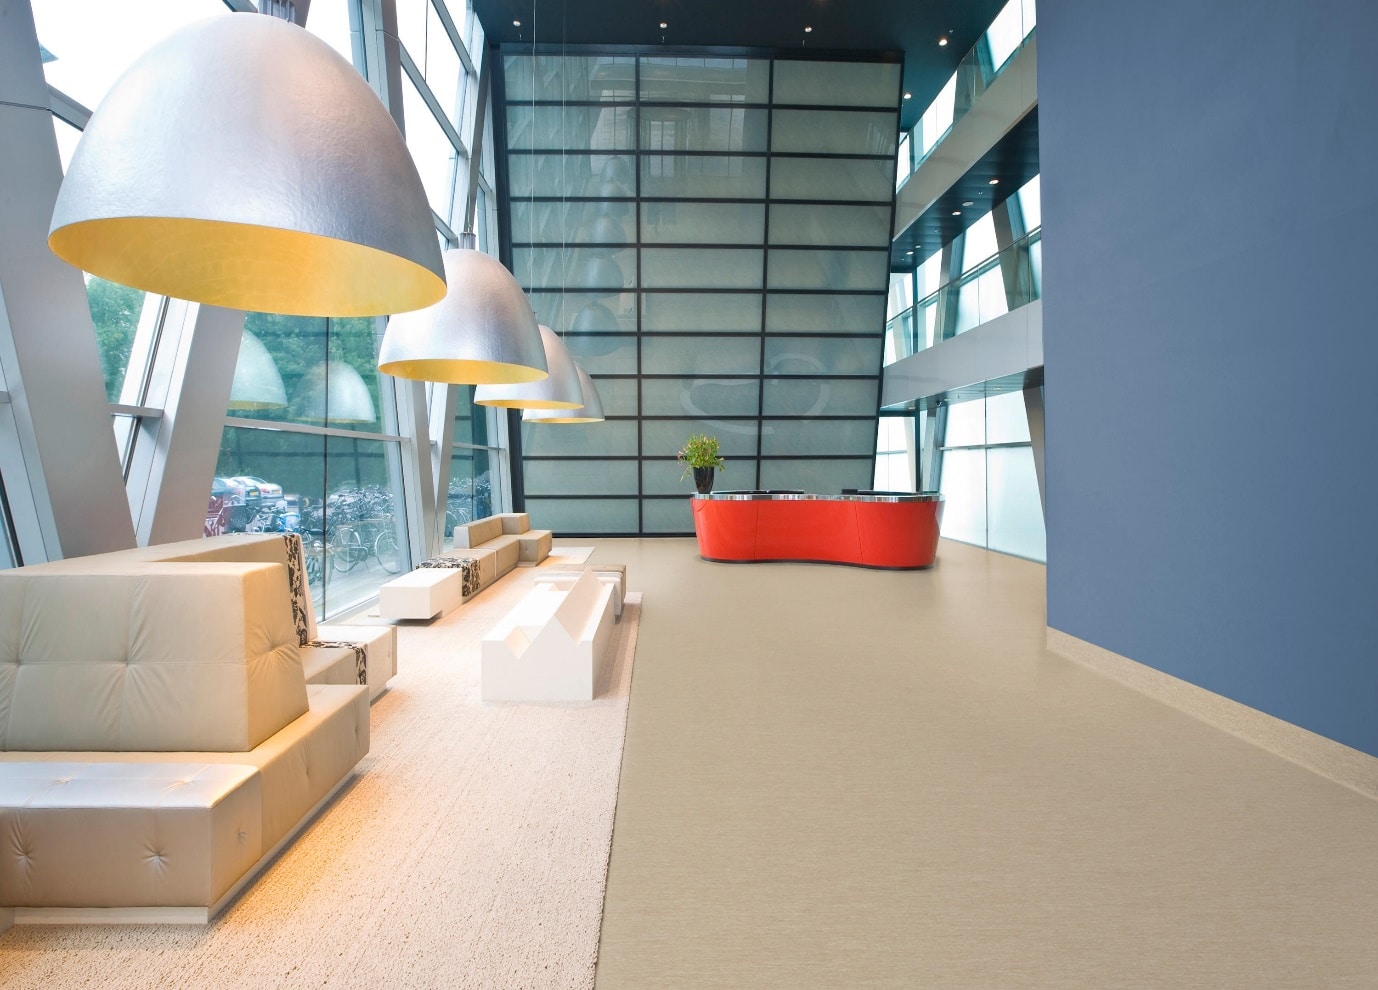 Homogeneous Flooring in reception area